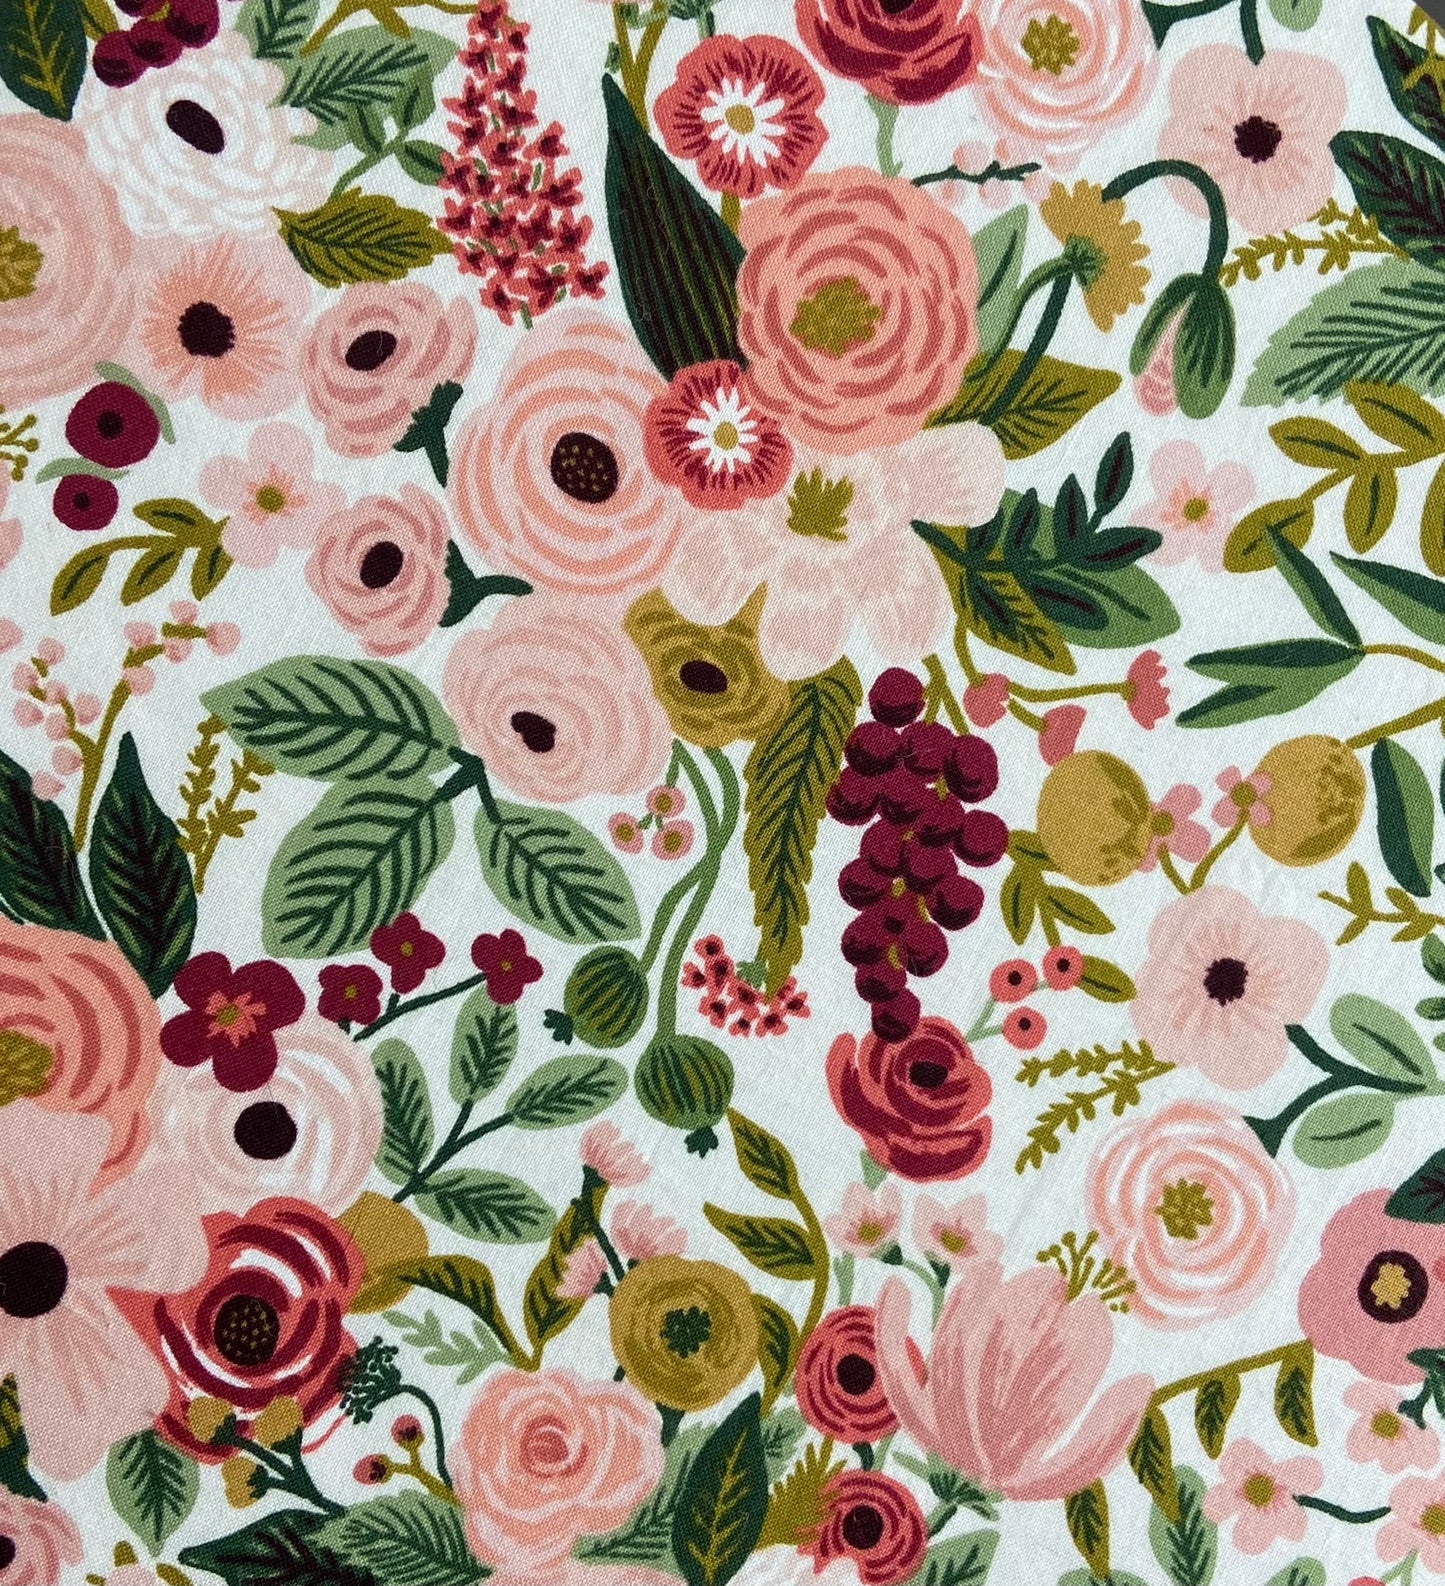 Reusable Bowl Cover (Garden Party pink floral fabric)